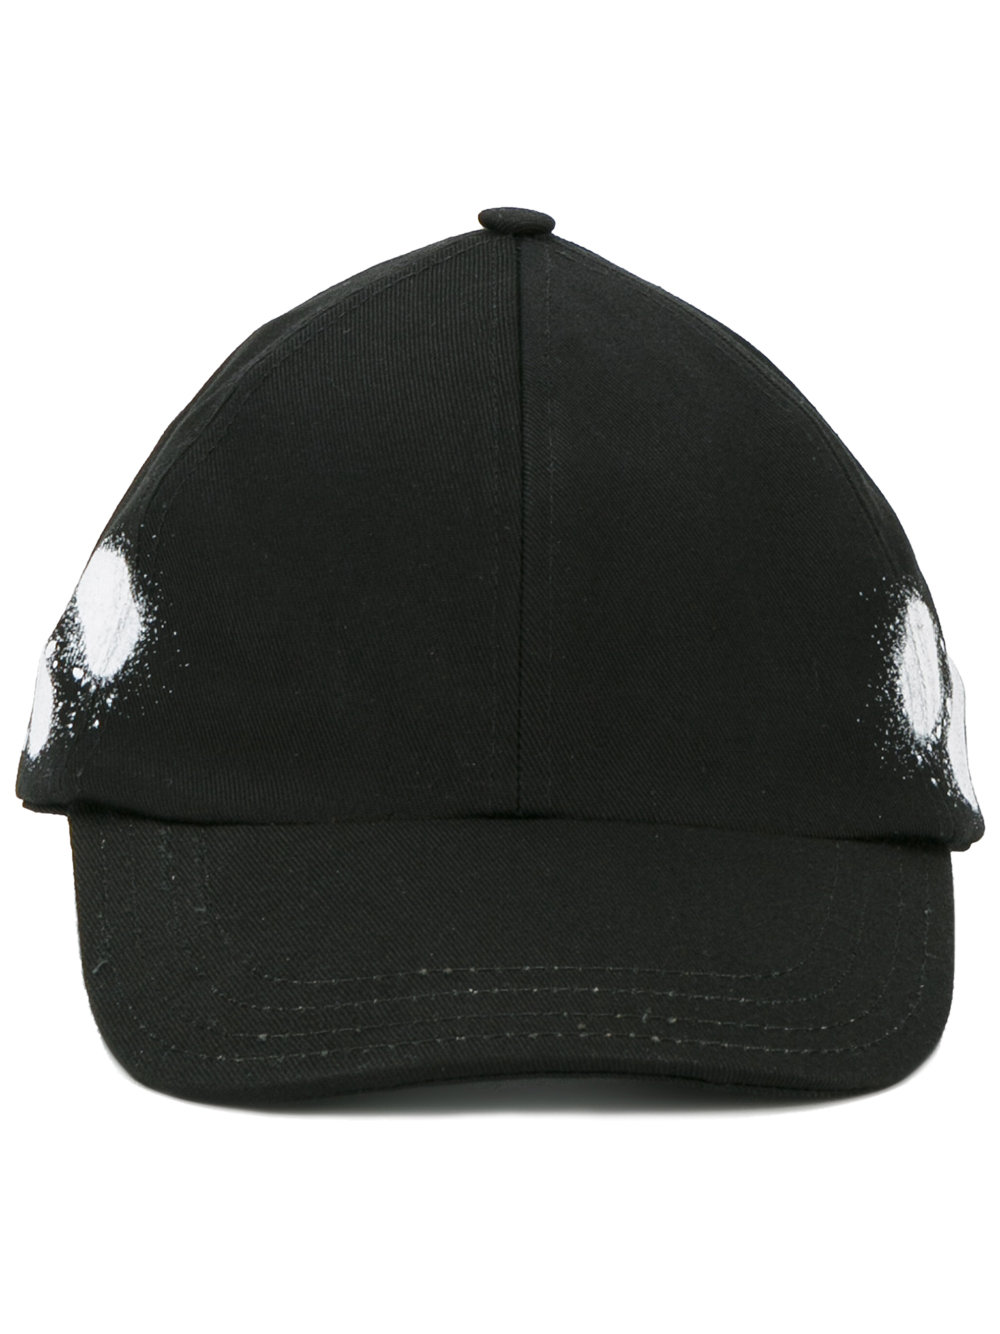 Off-White diagonal spray cap BLACK Men Accessories Hats